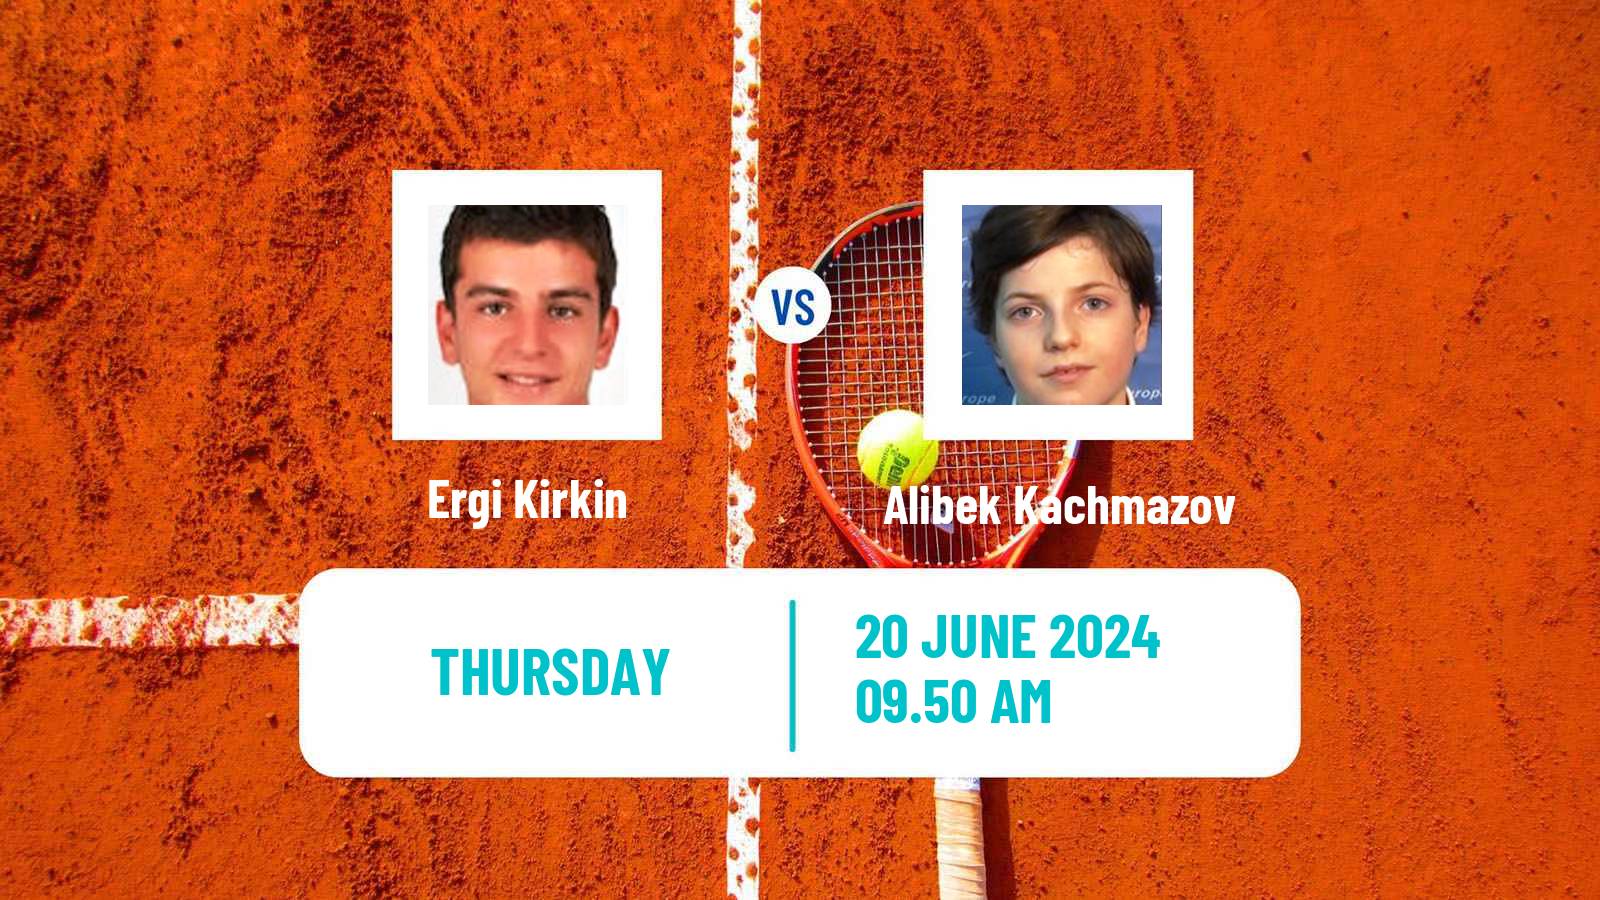 Tennis Blois Challenger Men Ergi Kirkin - Alibek Kachmazov